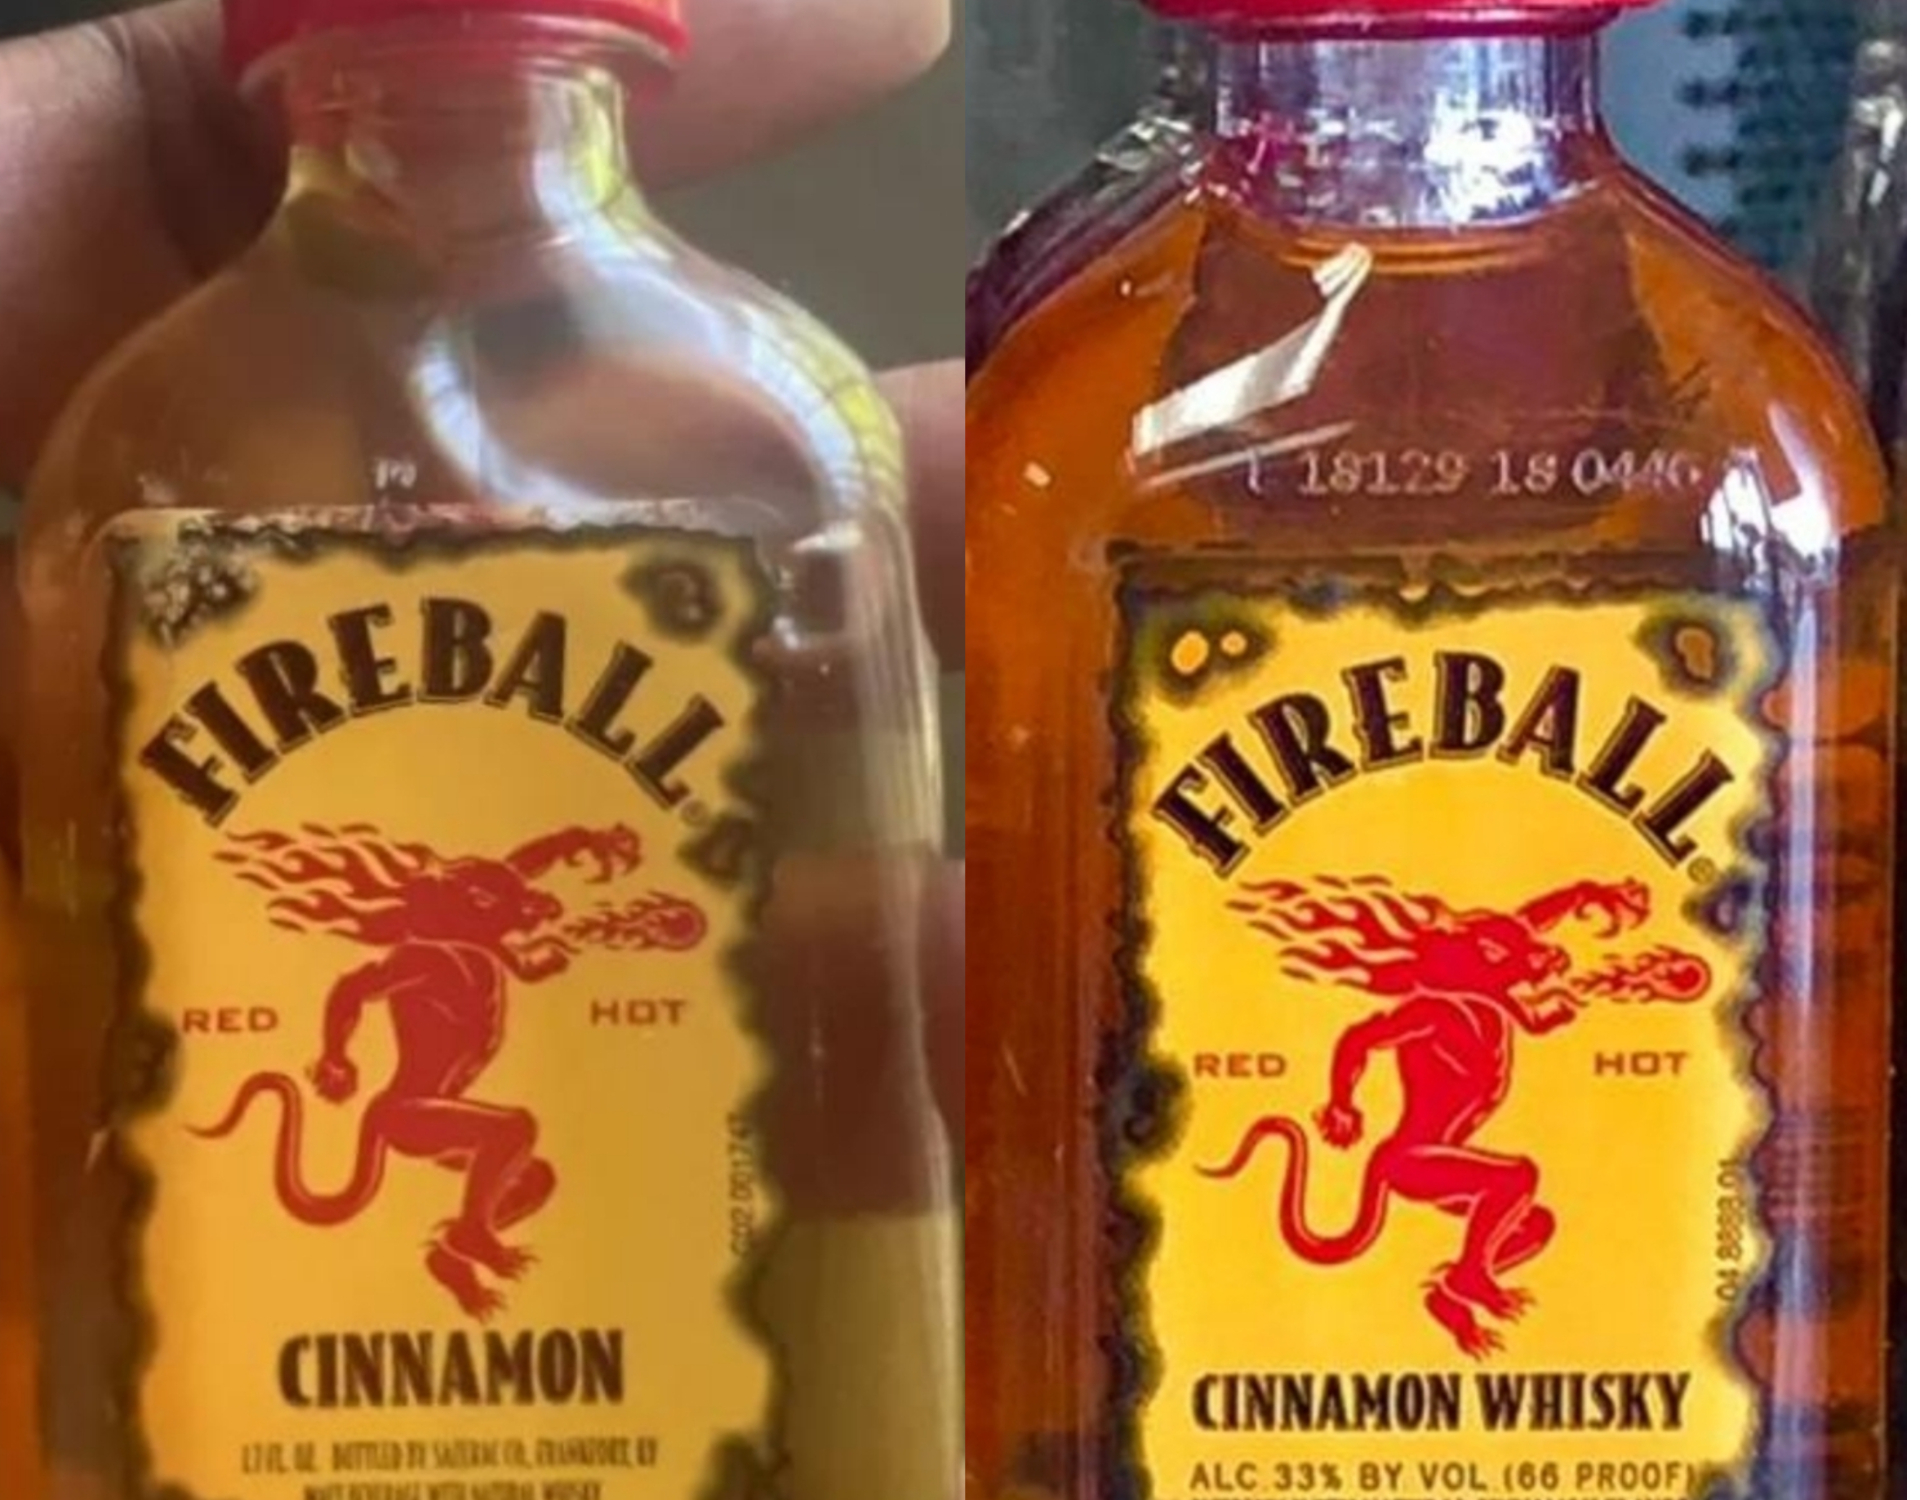 Fireball Cinnamon Whisky lawsuit, differ